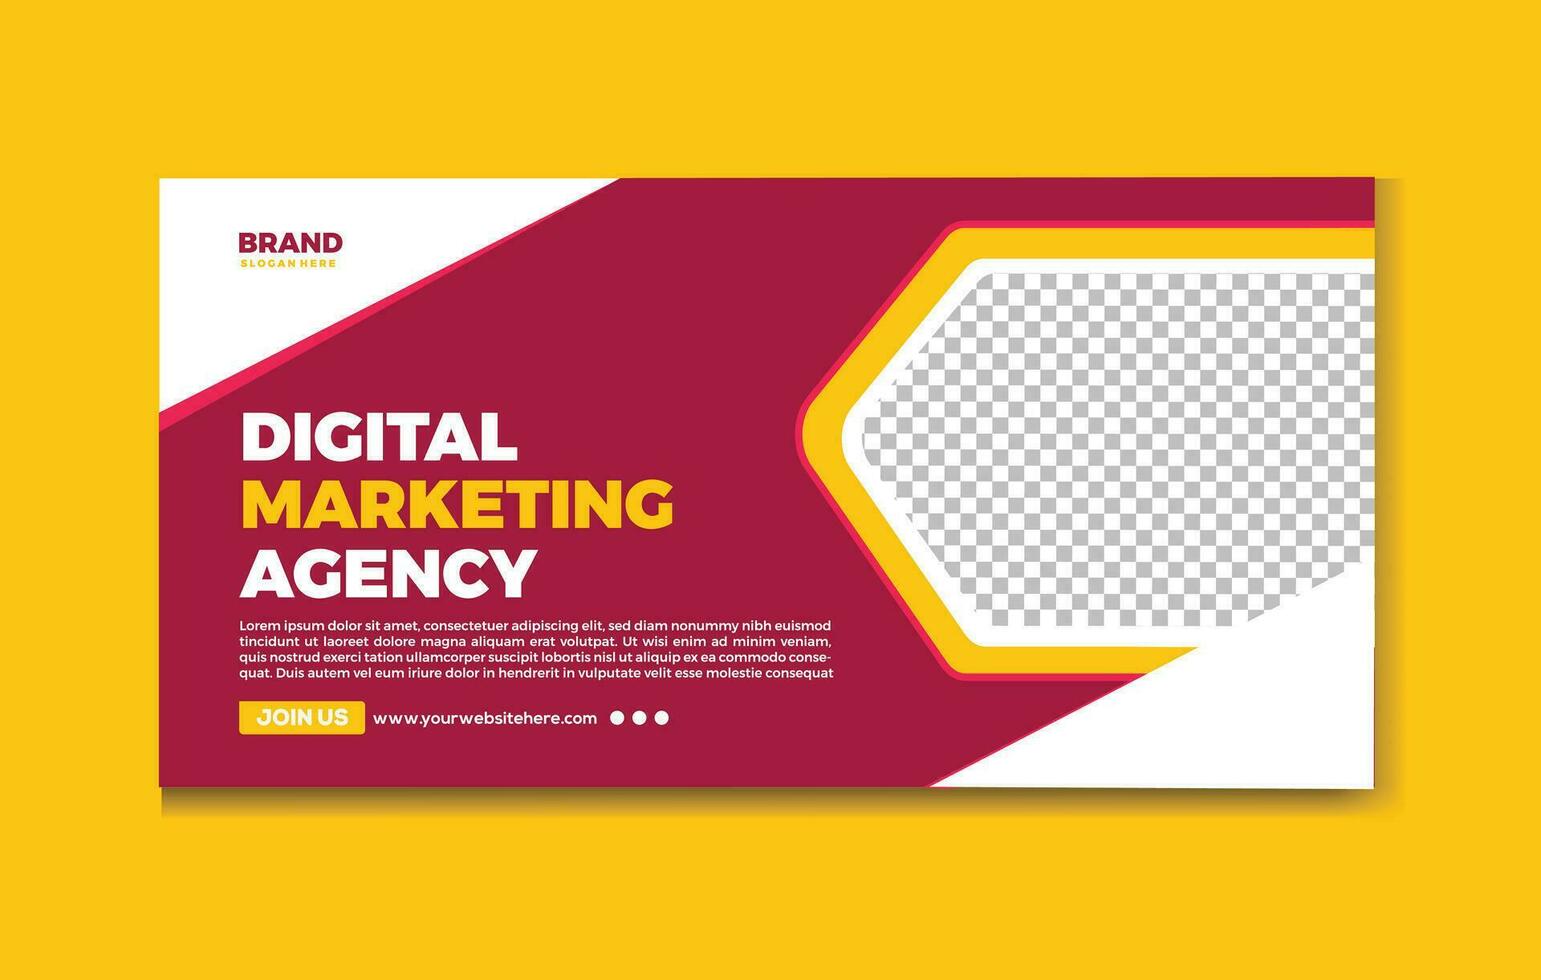 Digital marketing agency banner template design, free vector